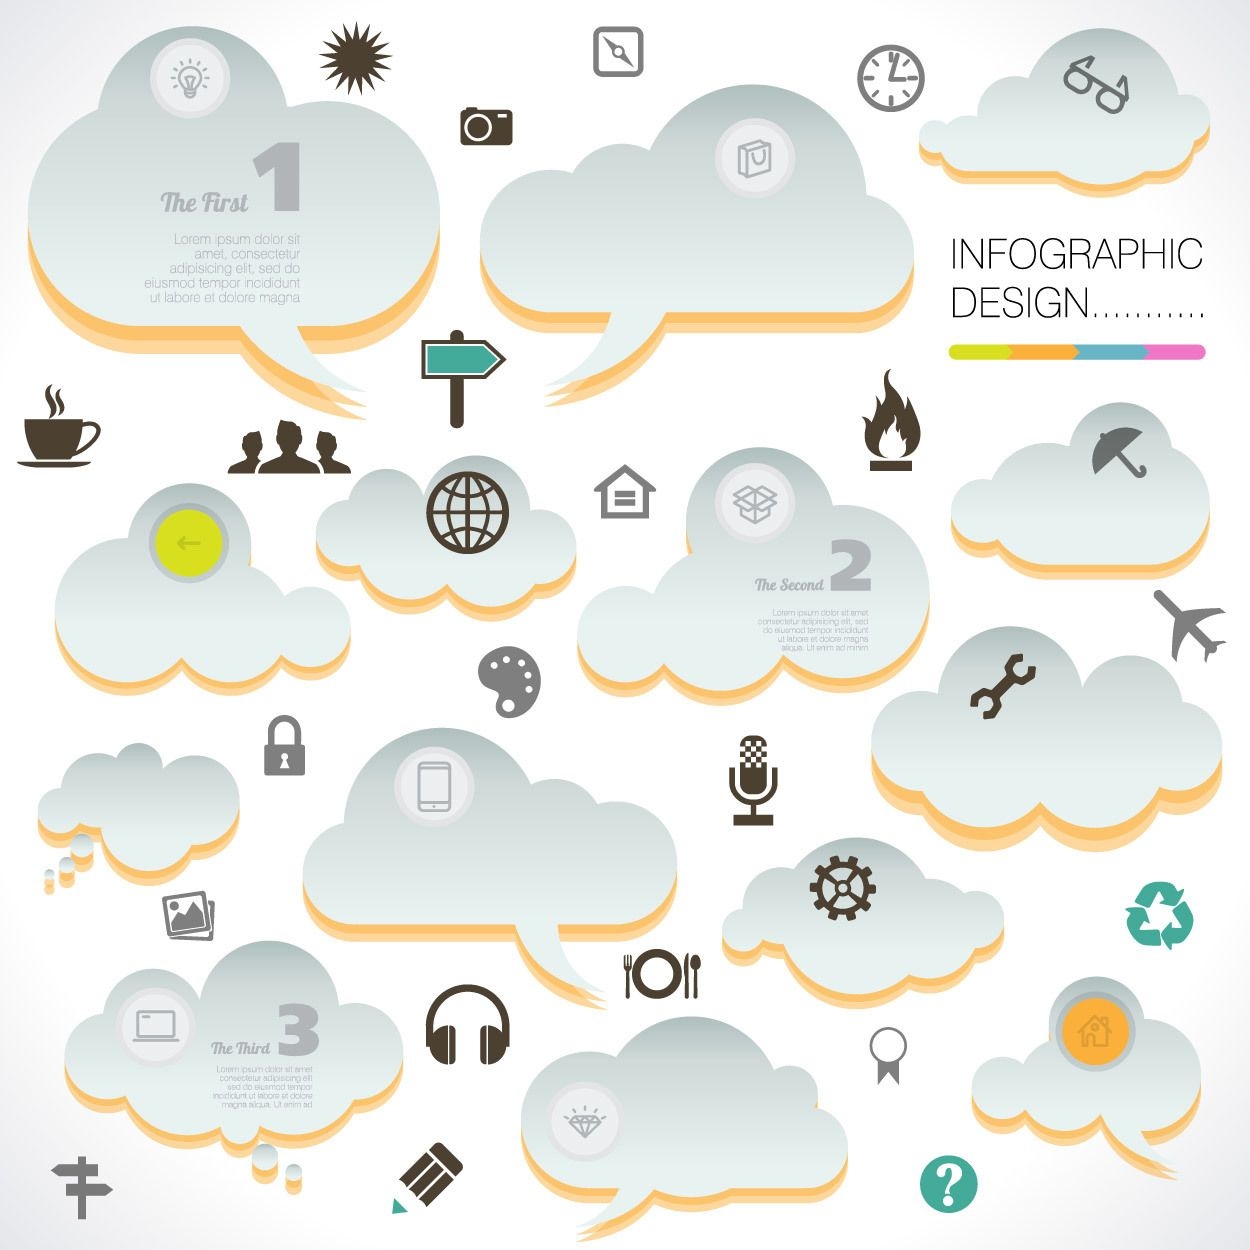 Nubes de infografía abstracta con iconos